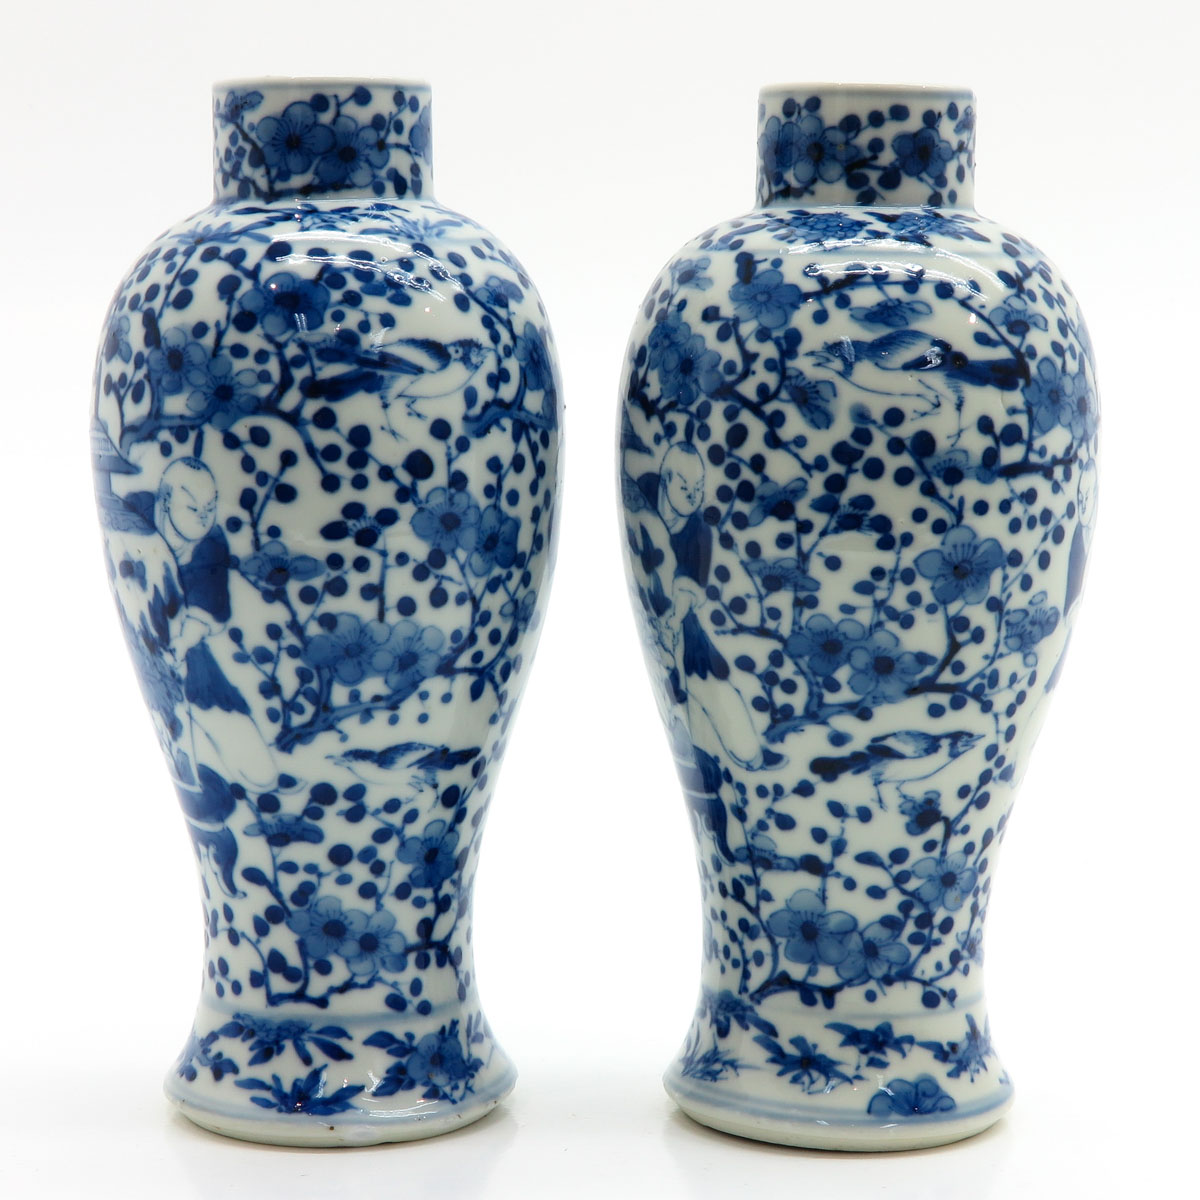 Lot of 2 China Porcelain Vases - Image 2 of 6